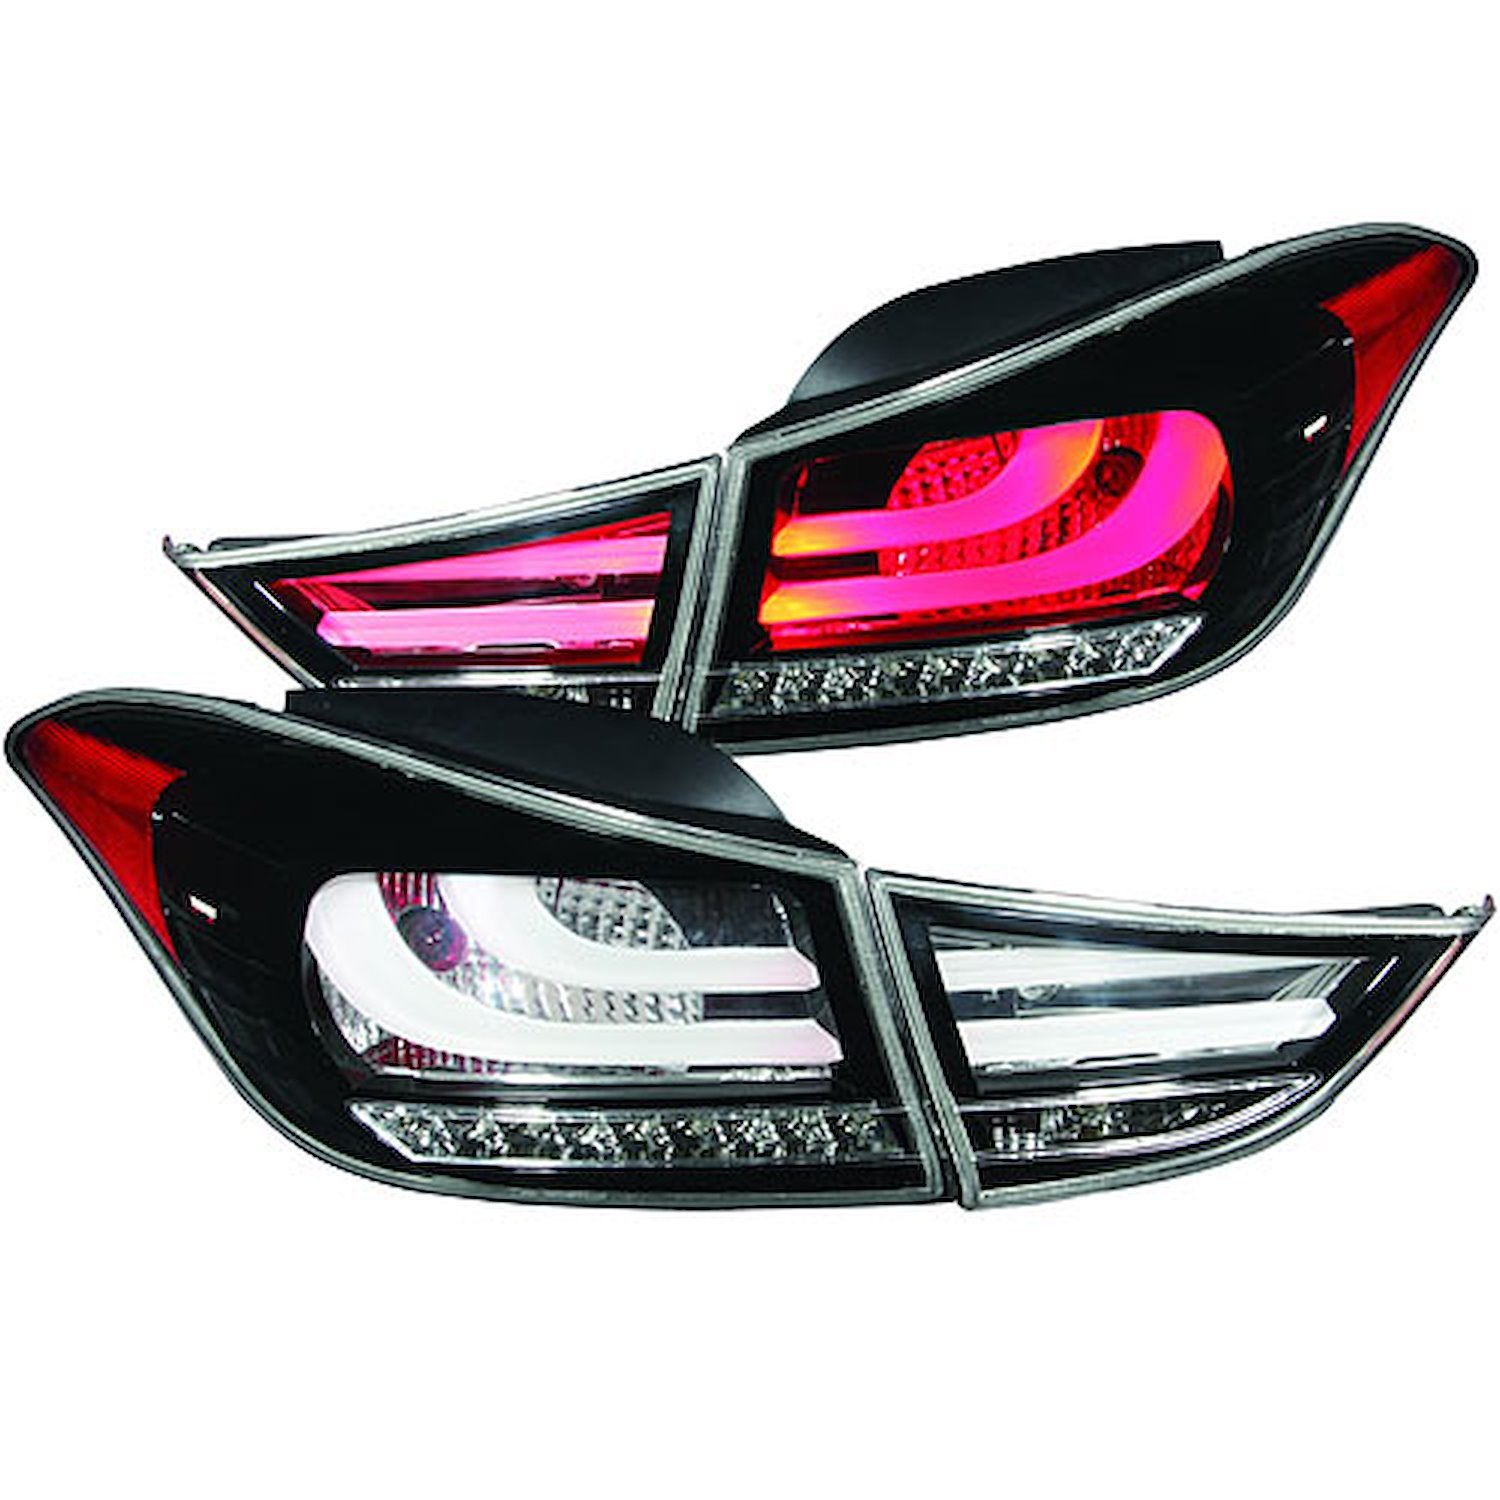 LED Taillights for 2011-2013 Hyundai Elantra